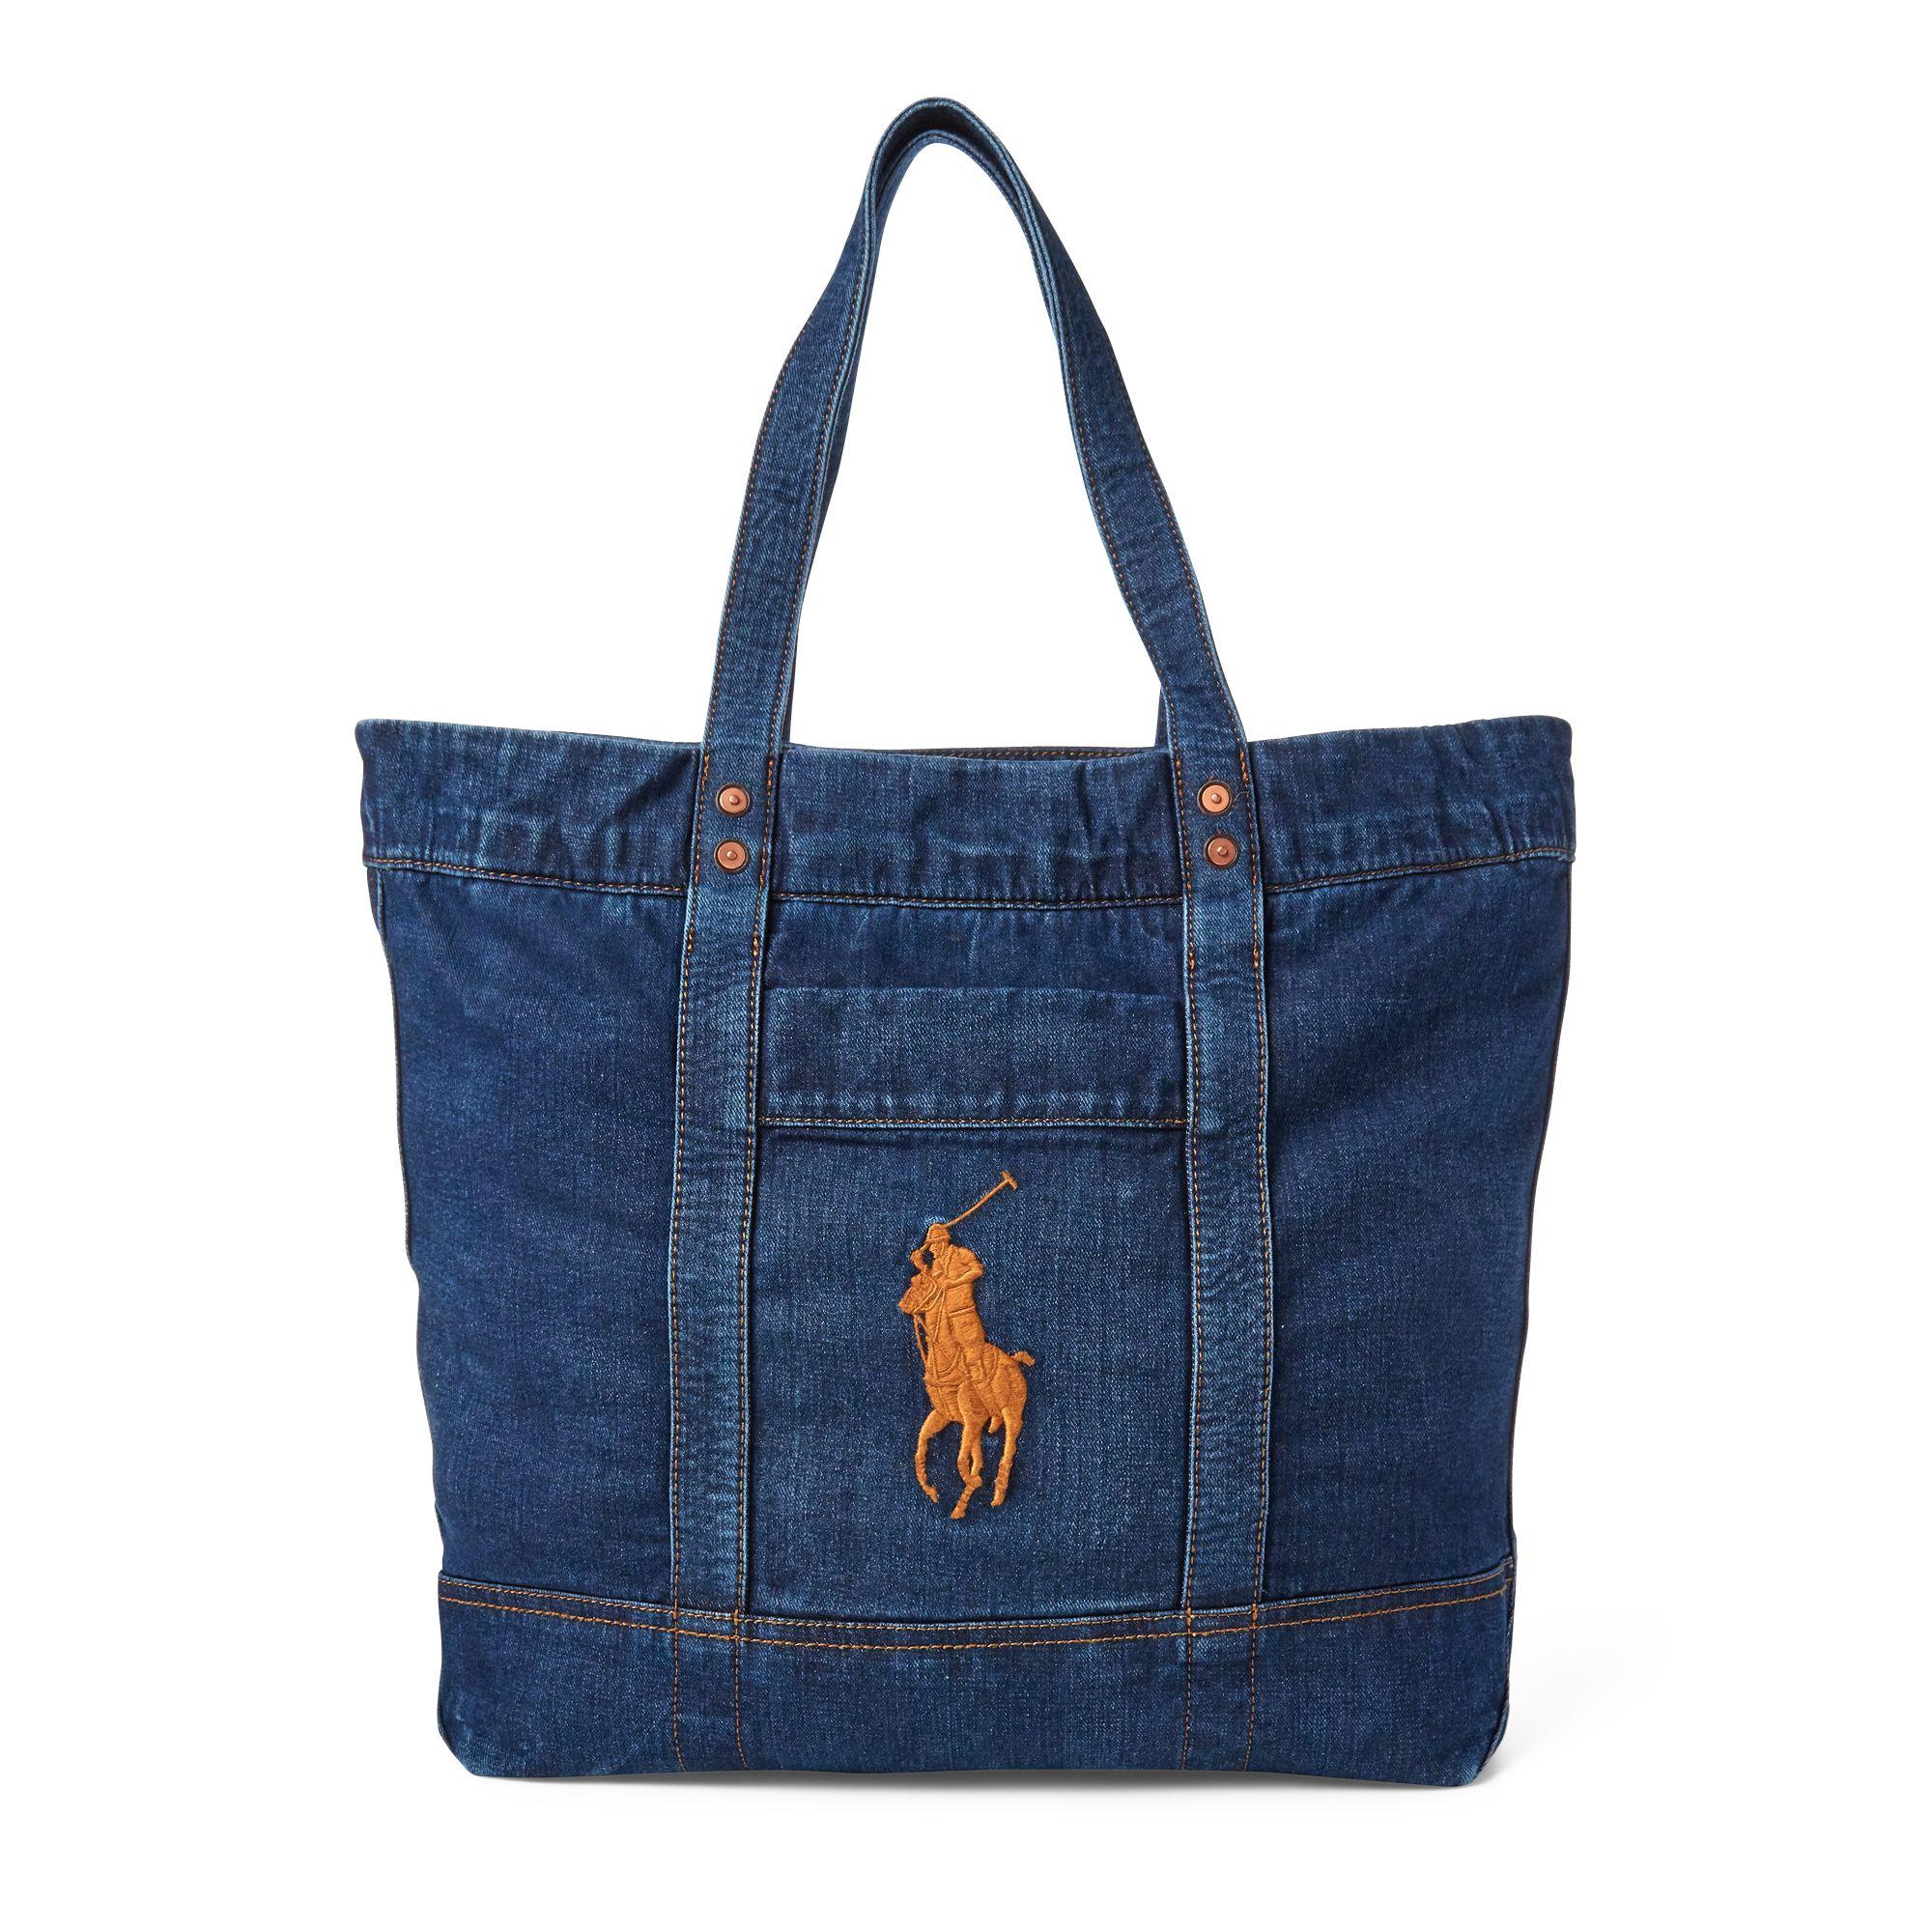 Polo Ralph Lauren Denim Big Pony Tote Bag in Navy (Blue) - Lyst